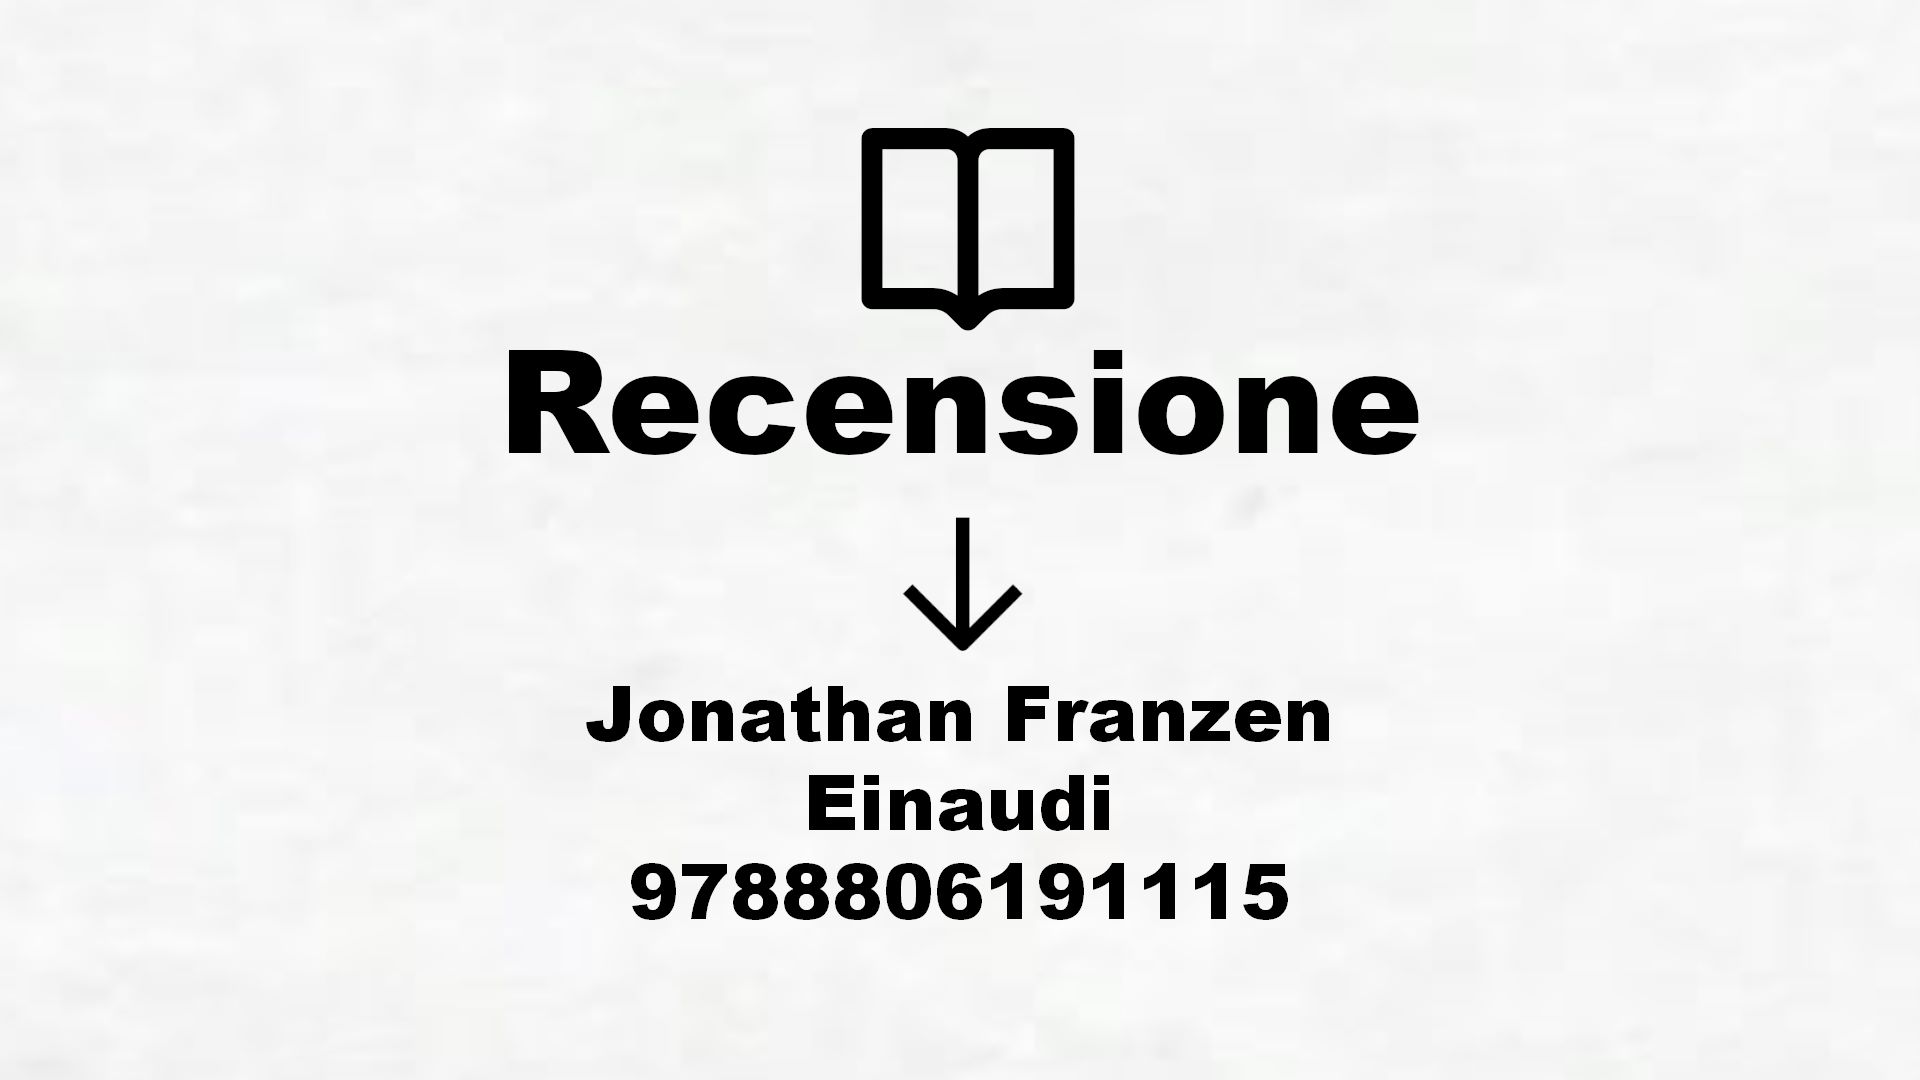 Jonathan Franzen Einaudi 9788806191115 – Recensione Libro